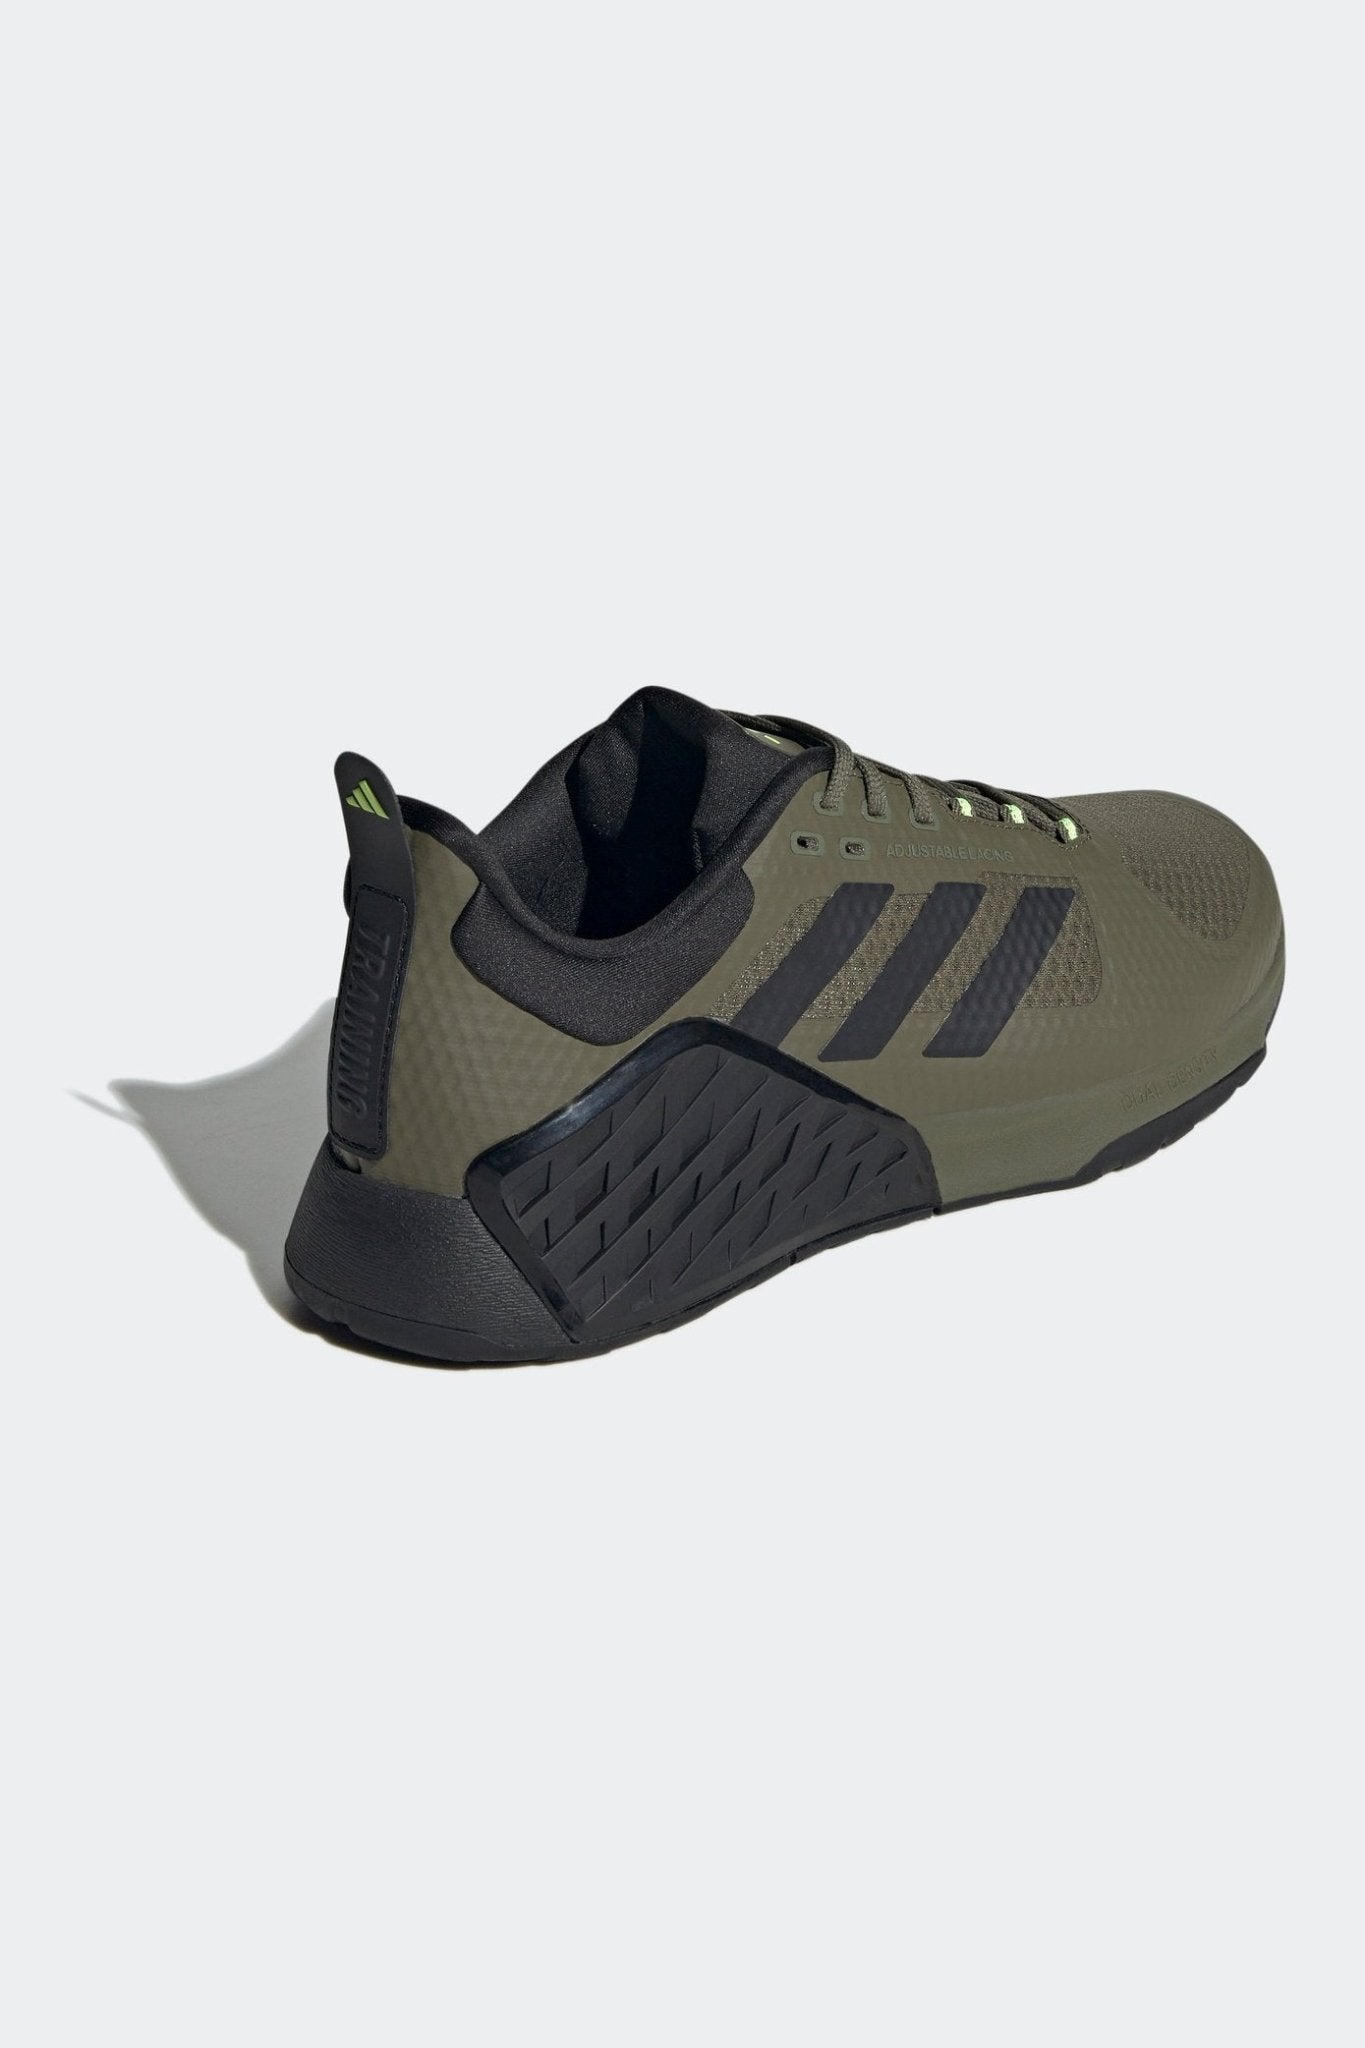 ADIDAS - נעלי ספורט לגברים DROPSET 2 TRAINER בצבע ירוק זית - MASHBIR//365